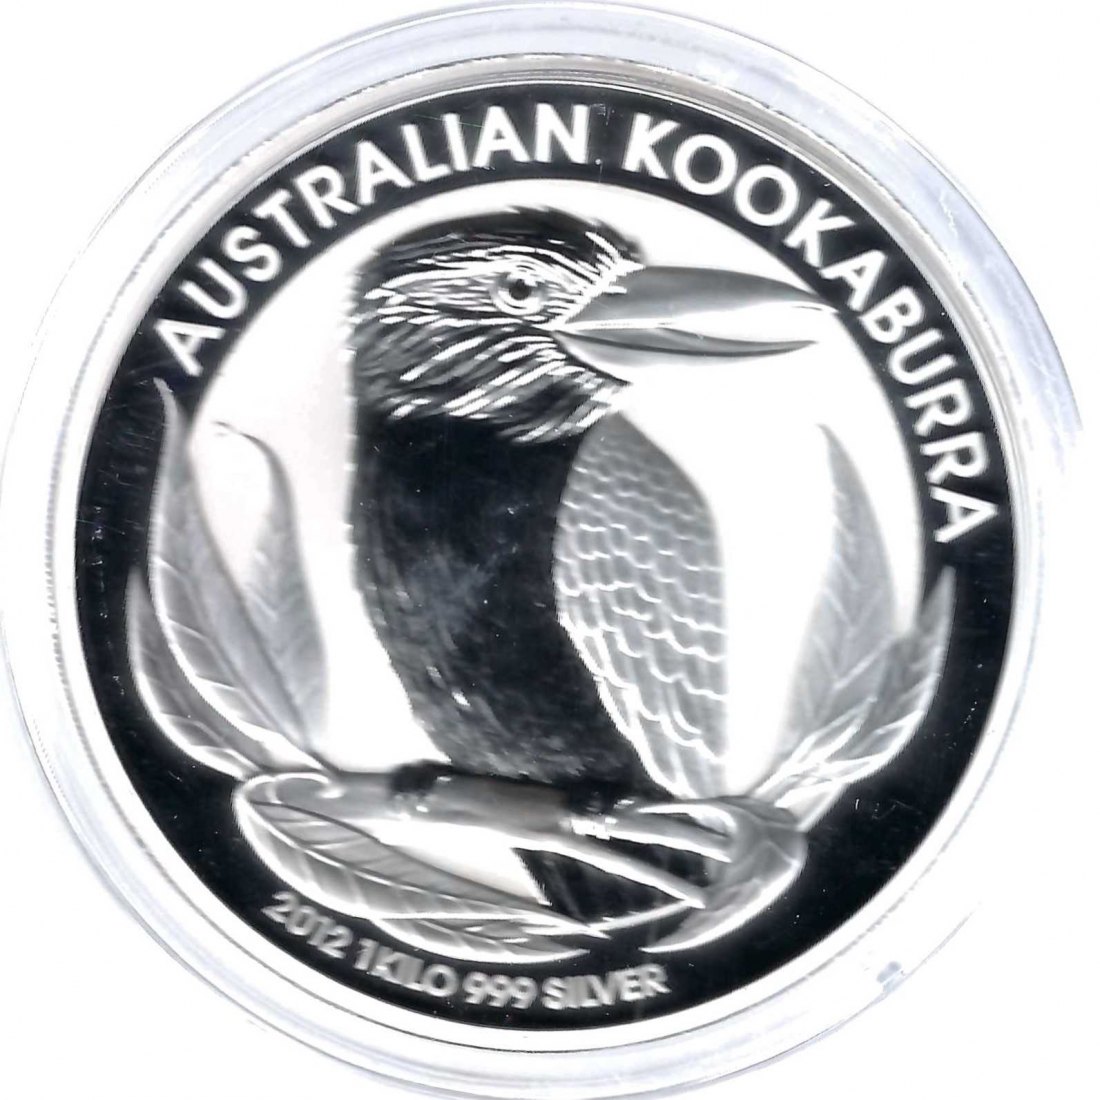  Australien 30 Dollar Kookaburra 2012 ST 1 Kilo Silber Münzenankauf Koblenz Frank Maurer AB 399   